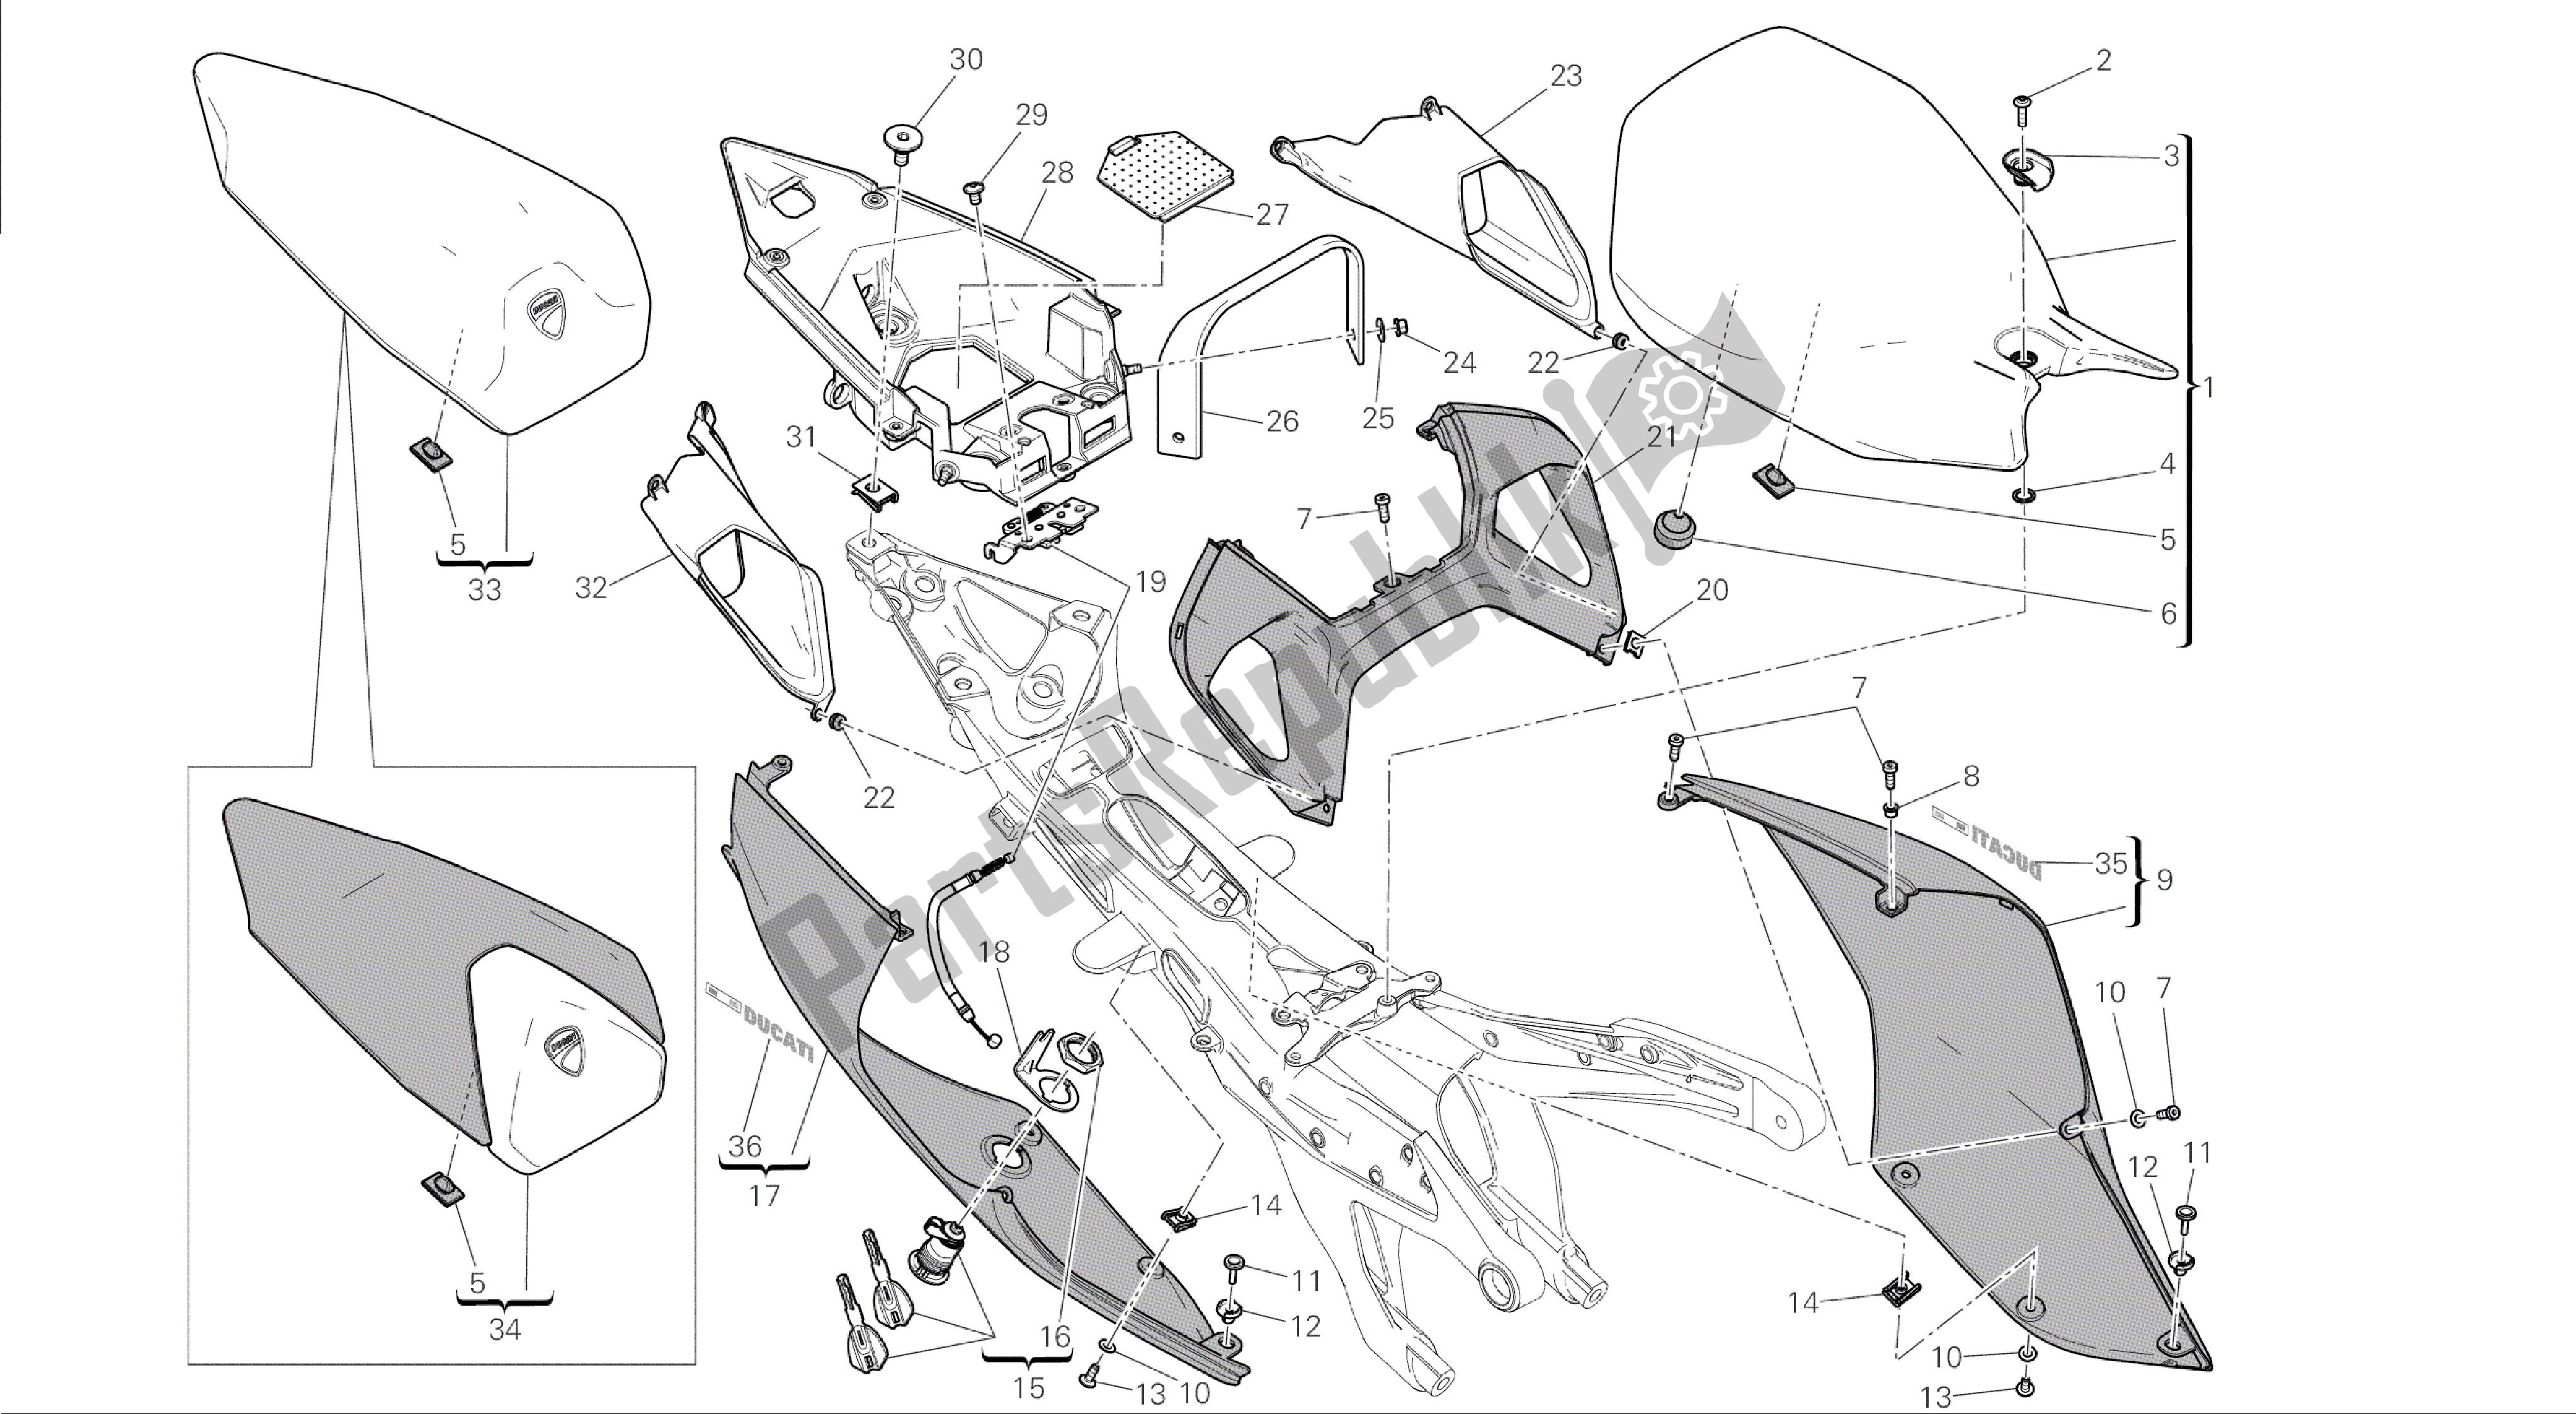 Alle onderdelen voor de Tekening 033 - Stoel [mod: 1199 Abs; Xst: Aus, Bra, Chn, Eur, Fra, Jap] Groepsframe van de Ducati Panigale ABS 1199 2014